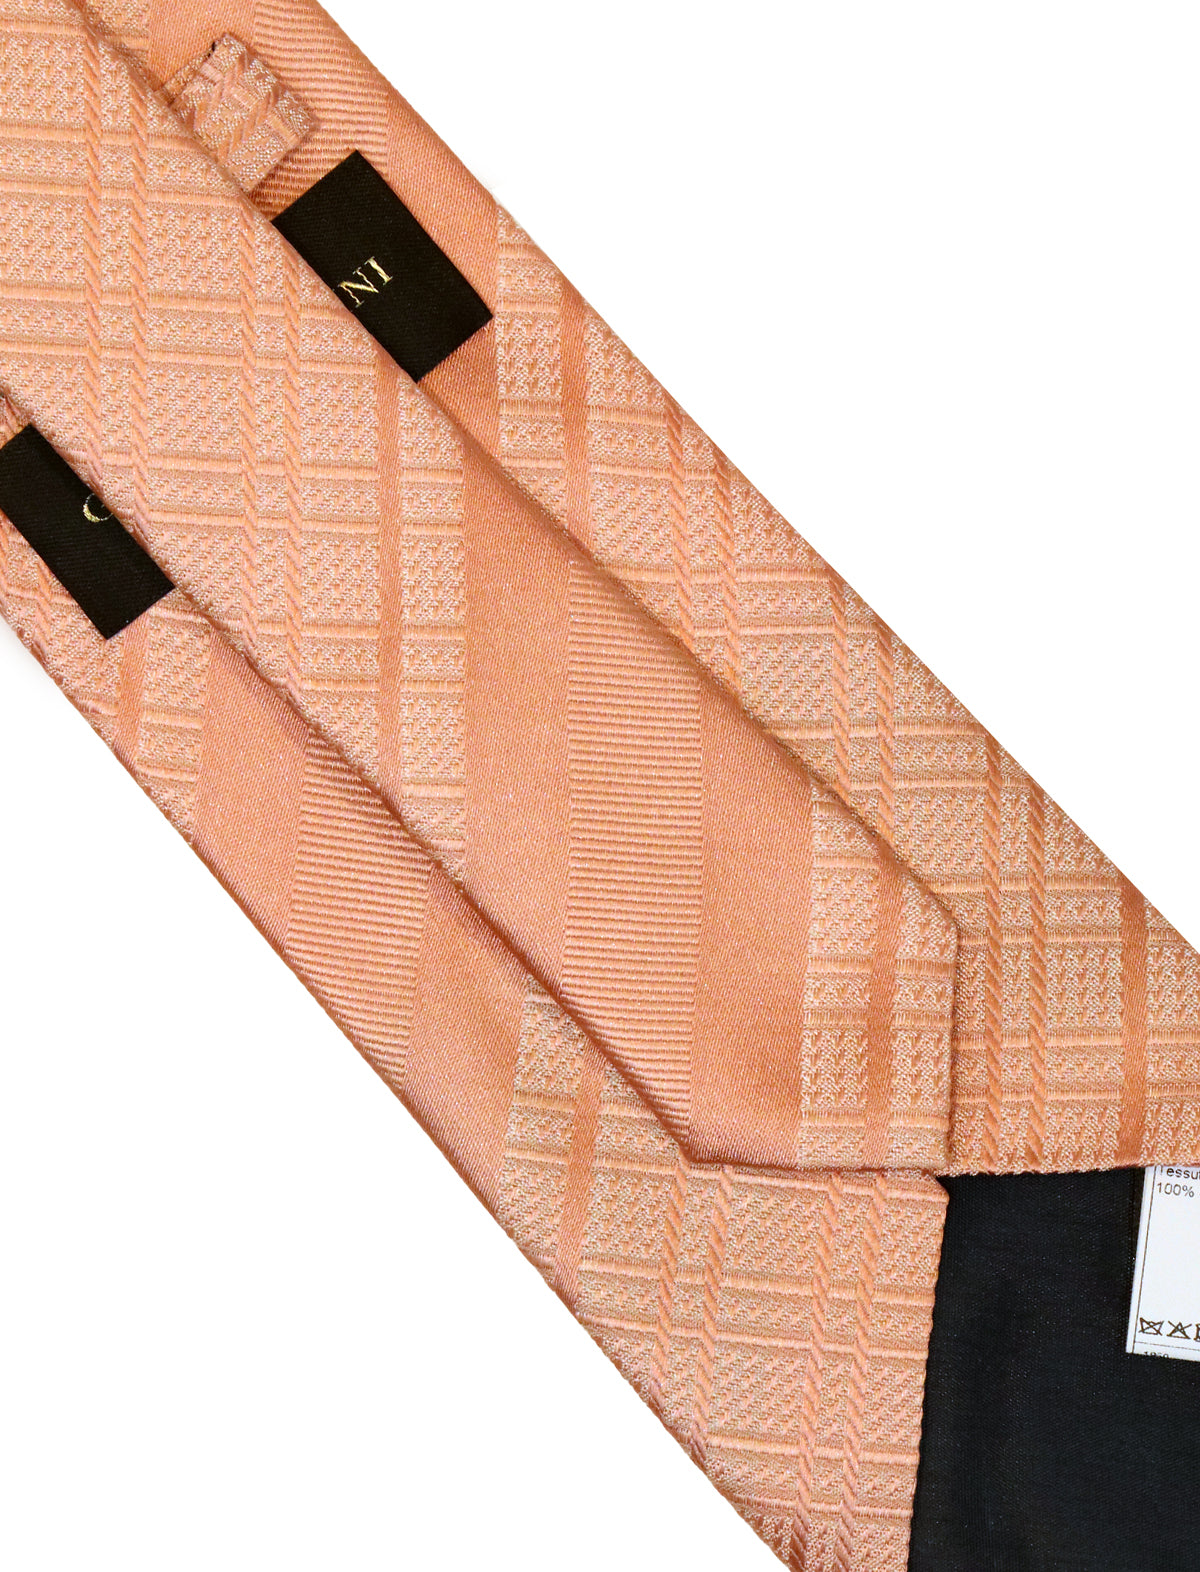 GABRIELE PASINI Italian Silk Tie in Vintage Pink